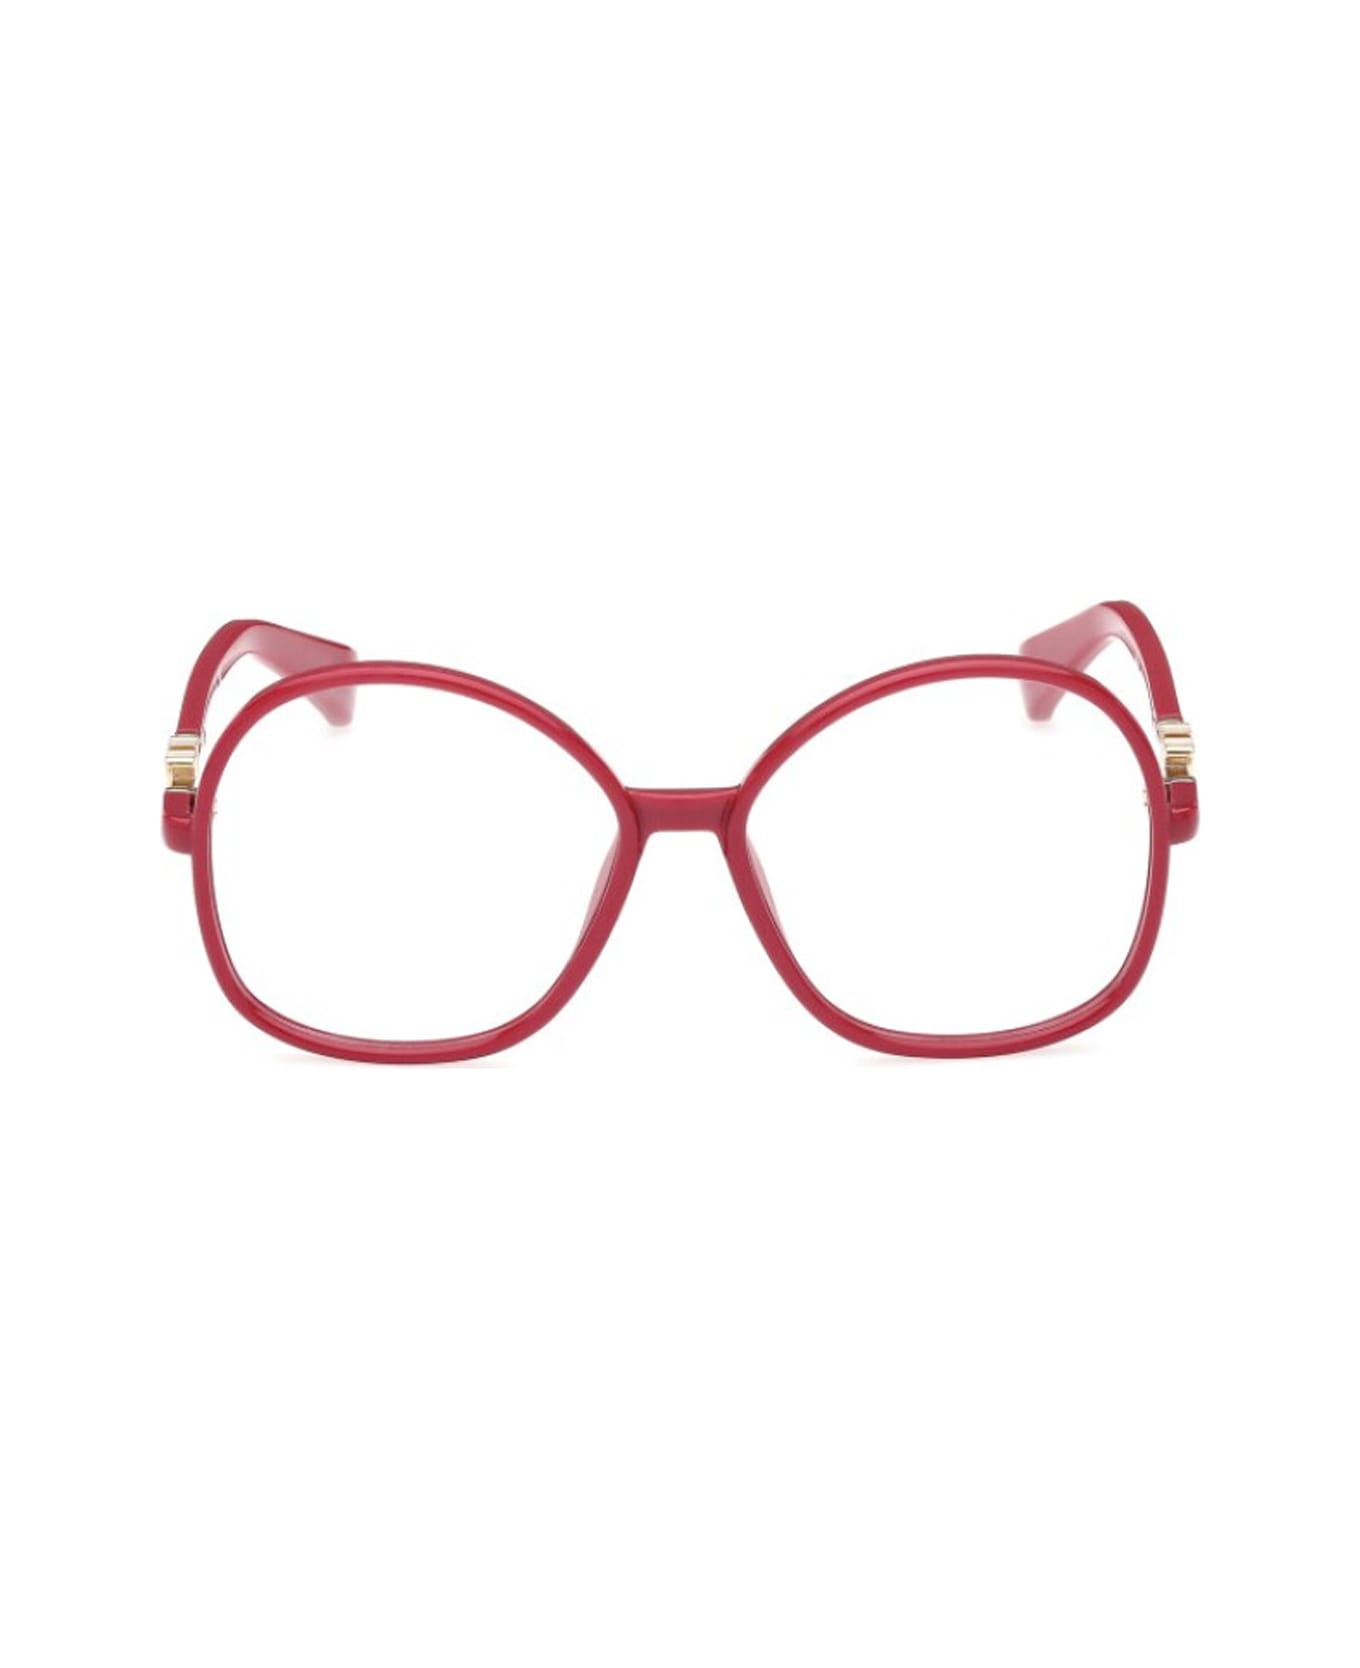 Max Mara Mm5100 075 Glasses - Rosso アイウェア